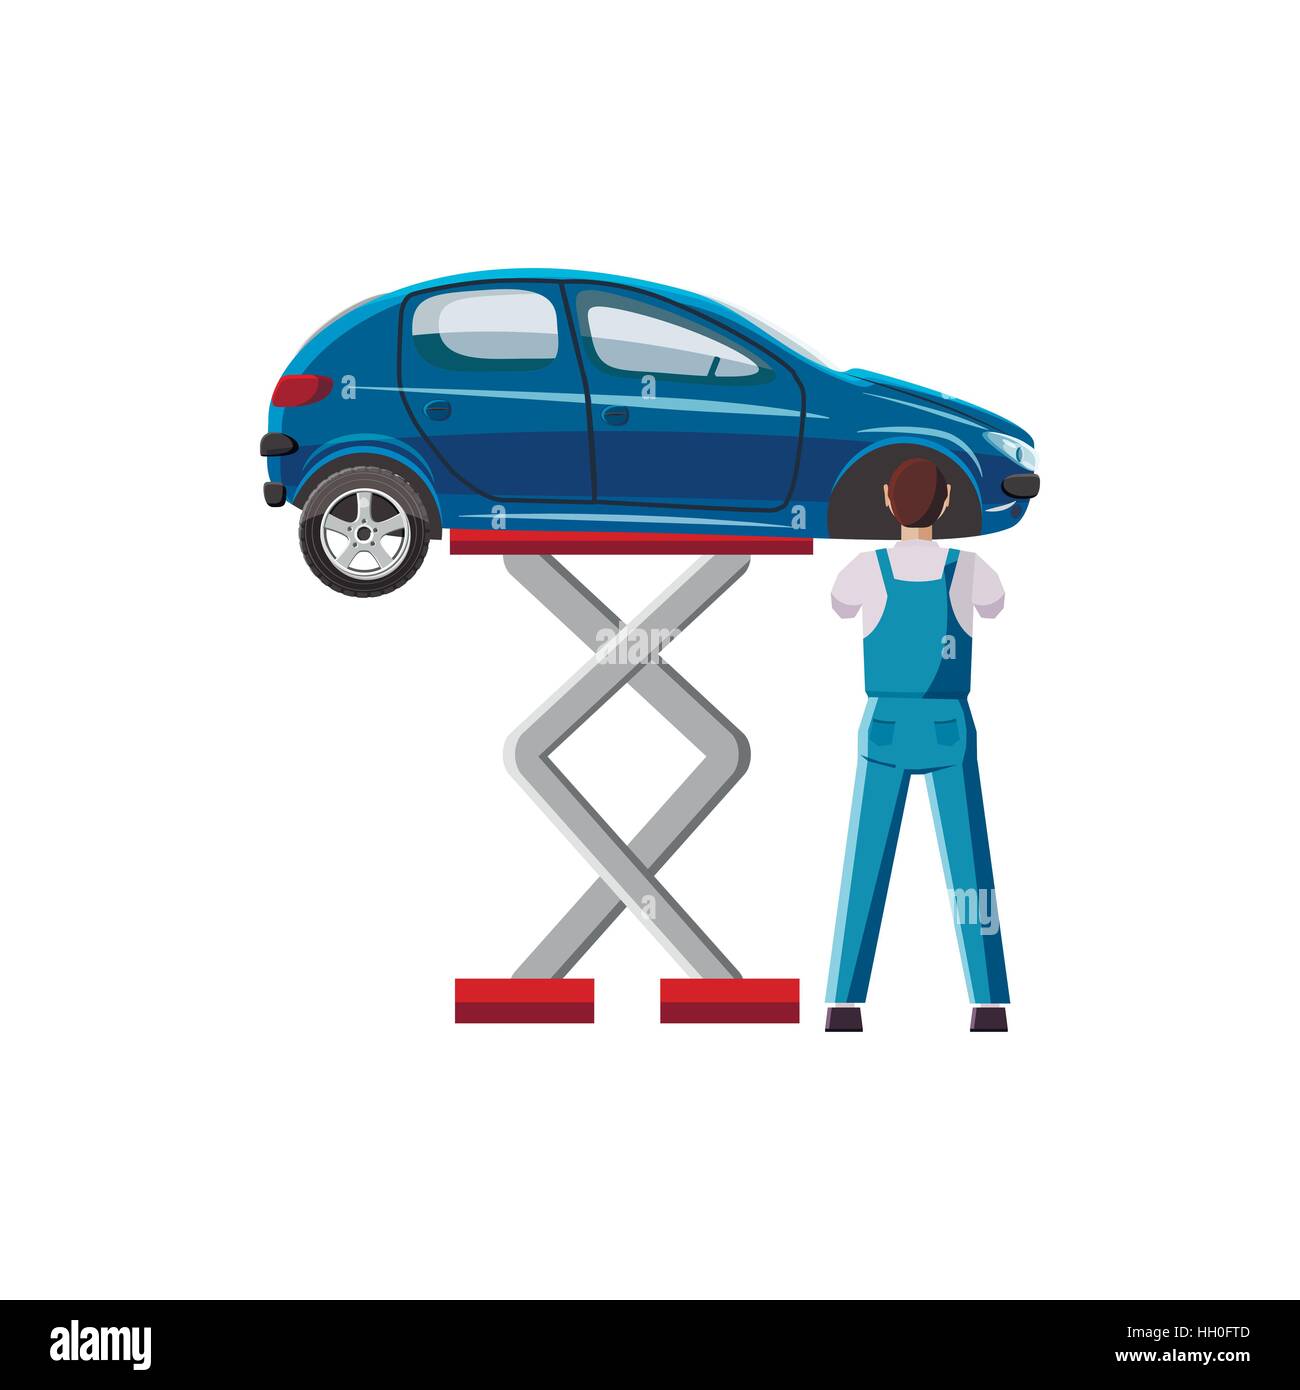 Blue car on a scissor lift platform icon Stock Vector